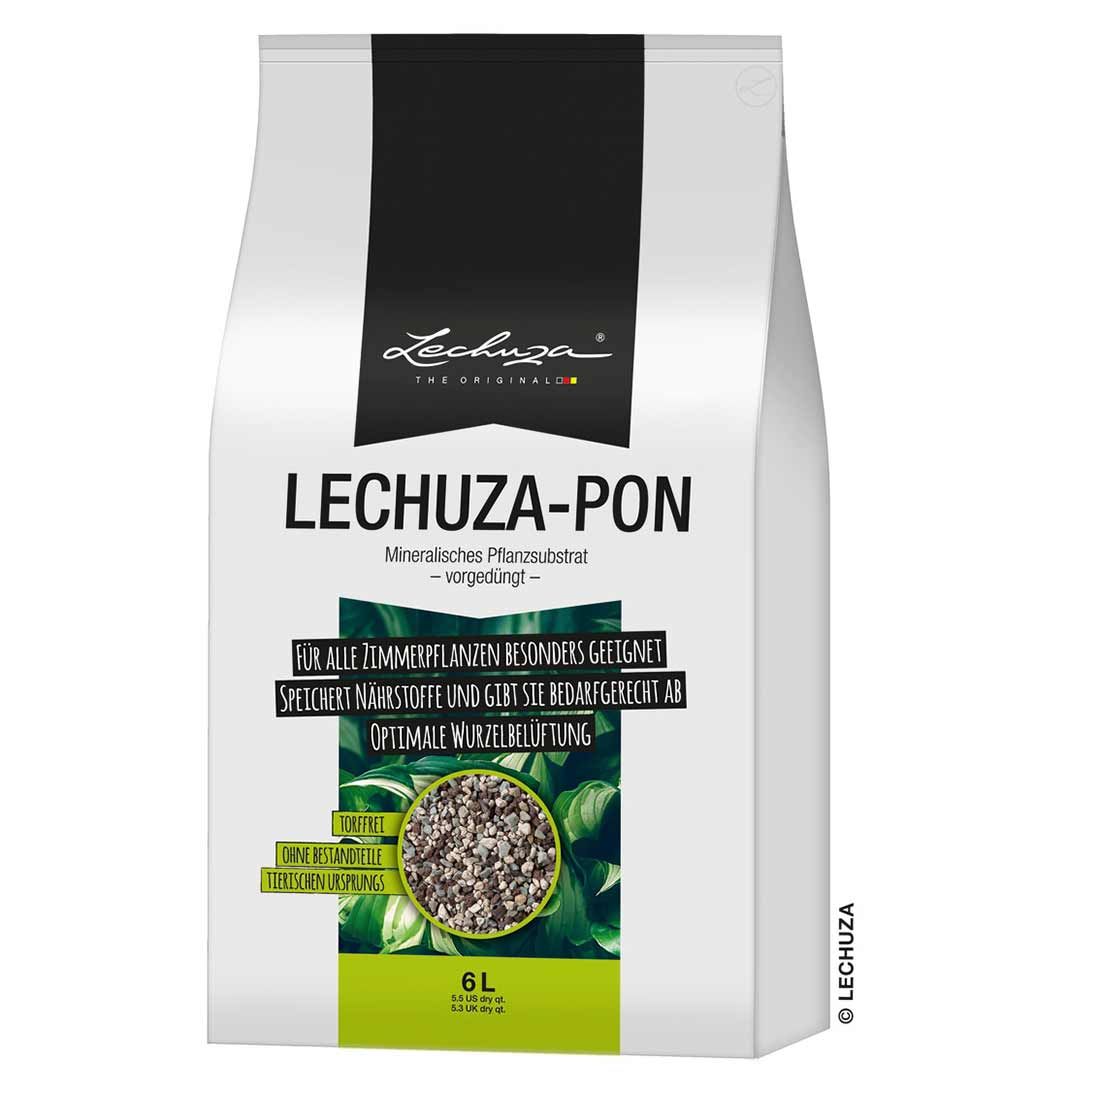 Lechuza Pon Pflanzsubstrat 6 Liter